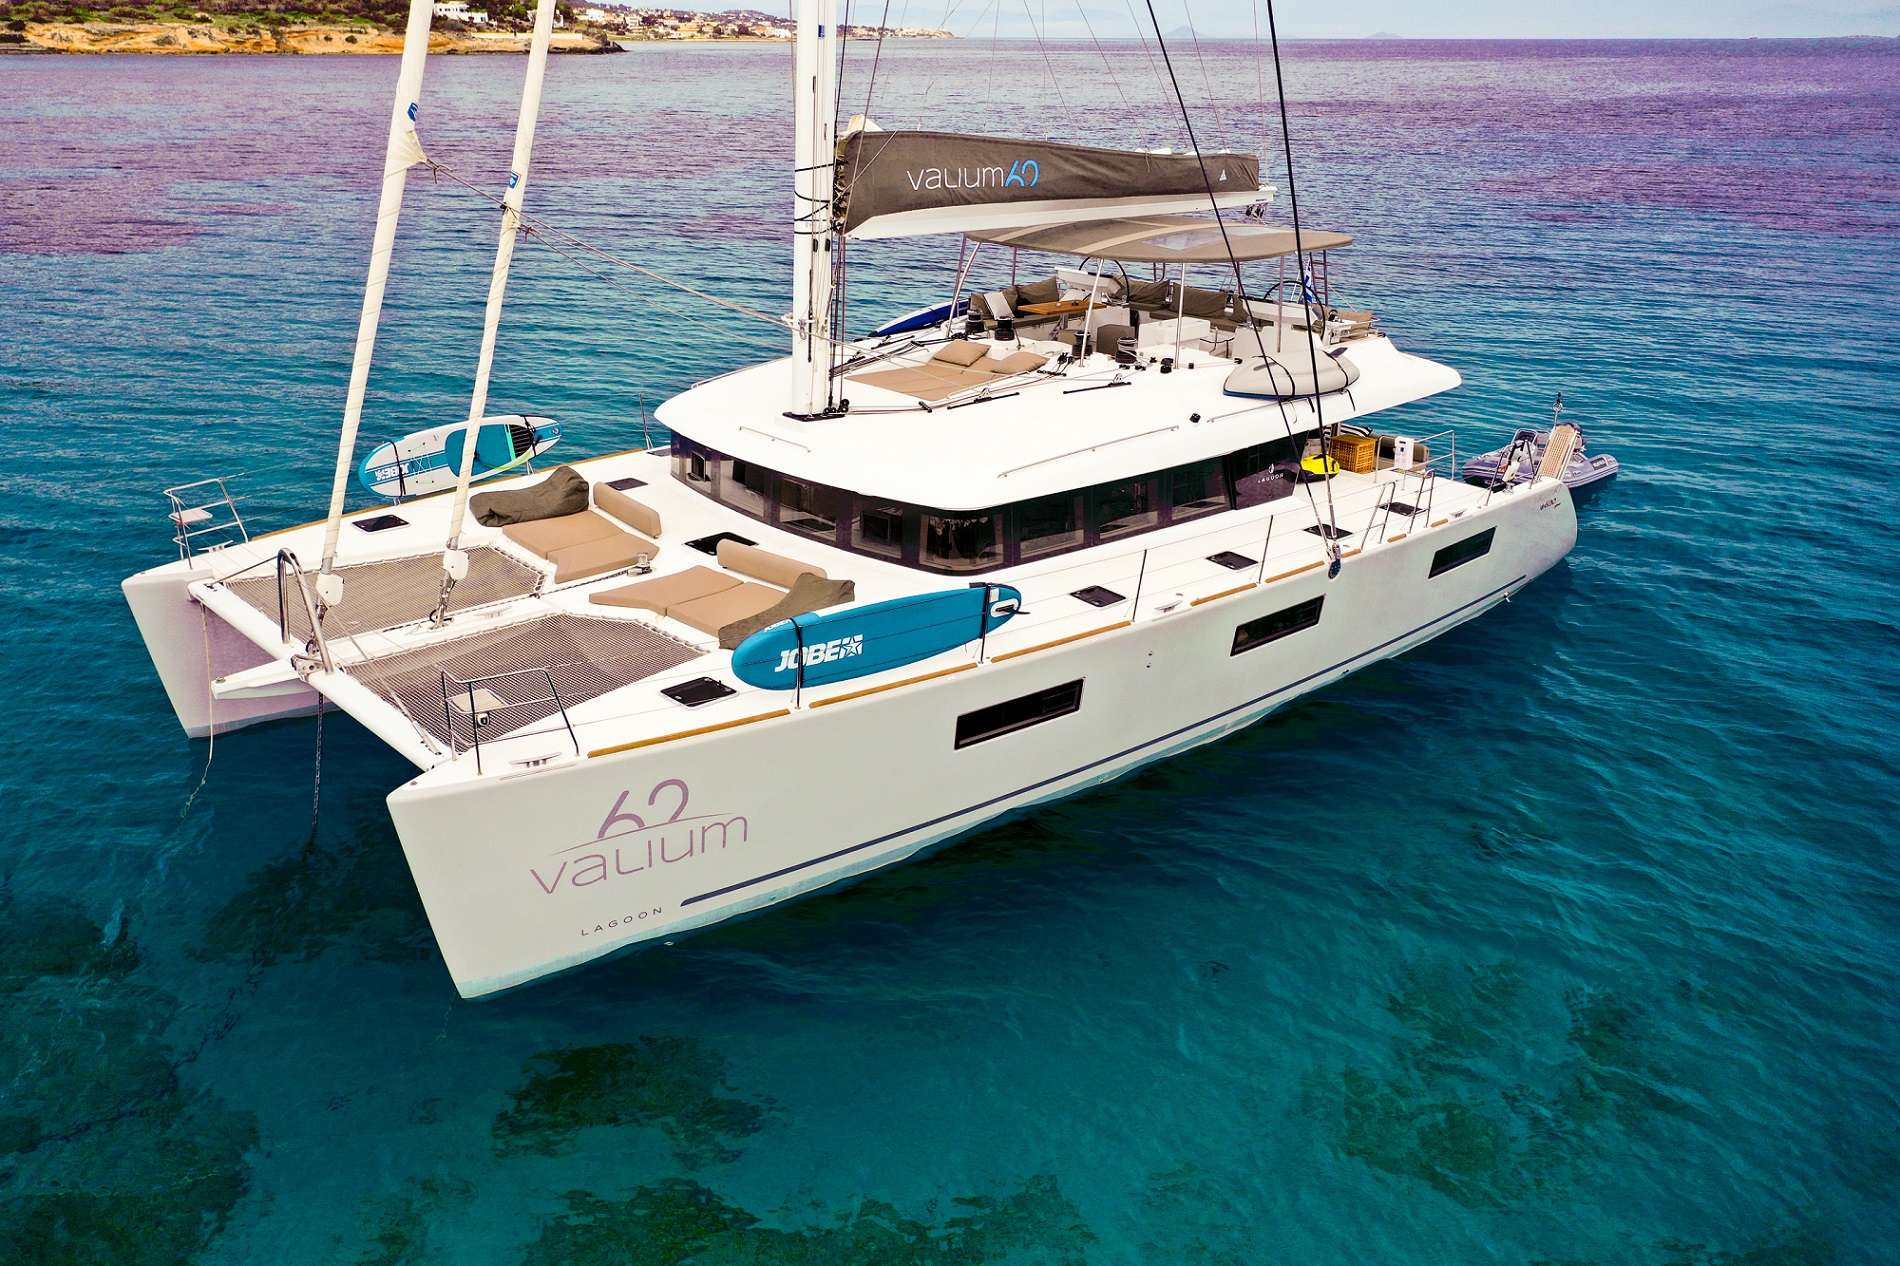 valium62 - Yacht Charter Zakynthos & Boat hire in Greece 2